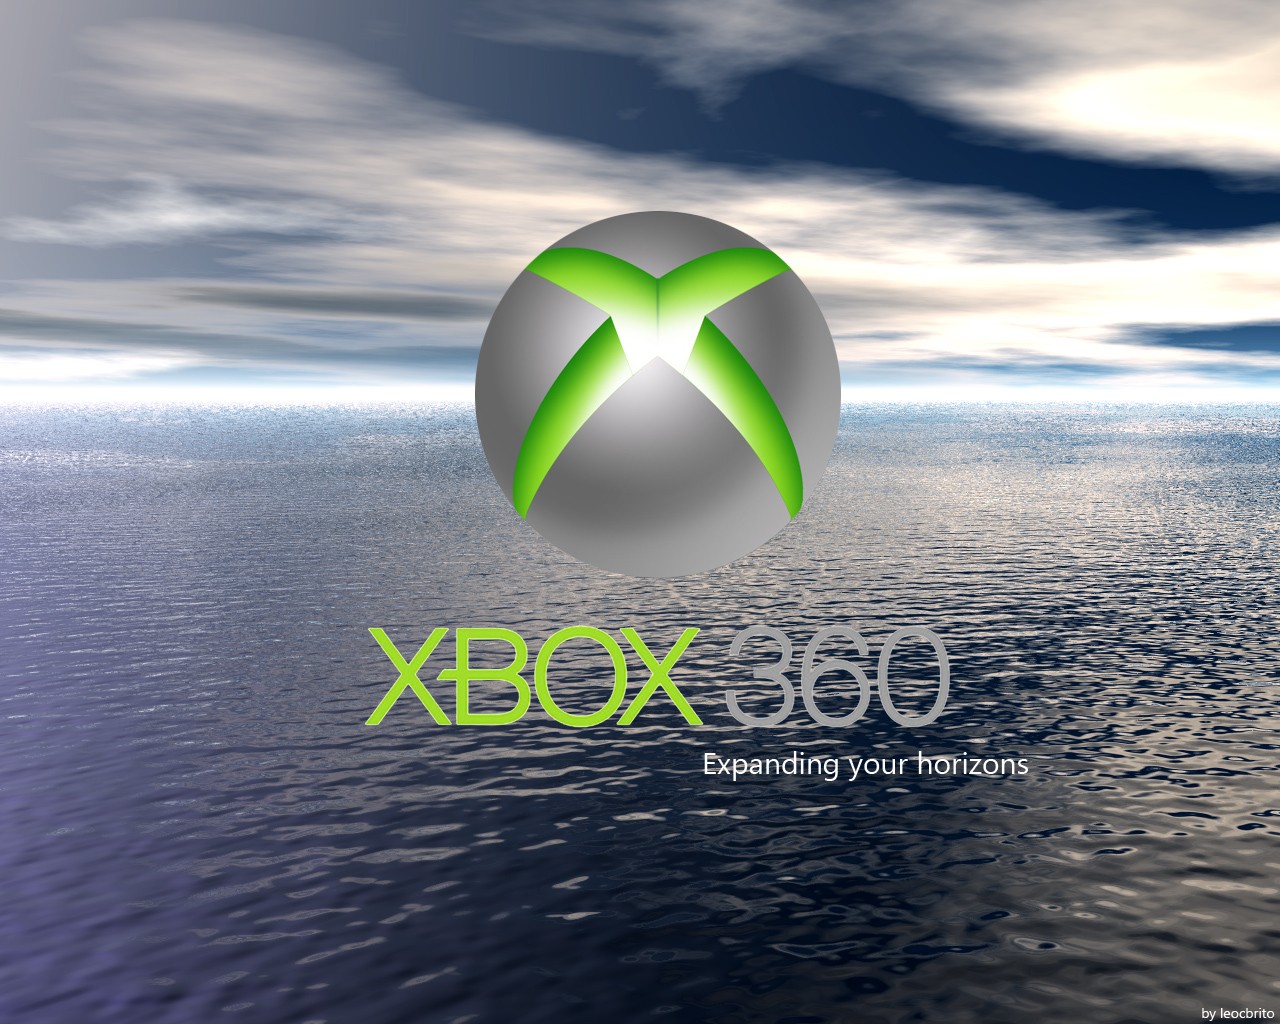 xbox logo wallpaper hdLogo Car Wallpaper All Xbox Logos The Best